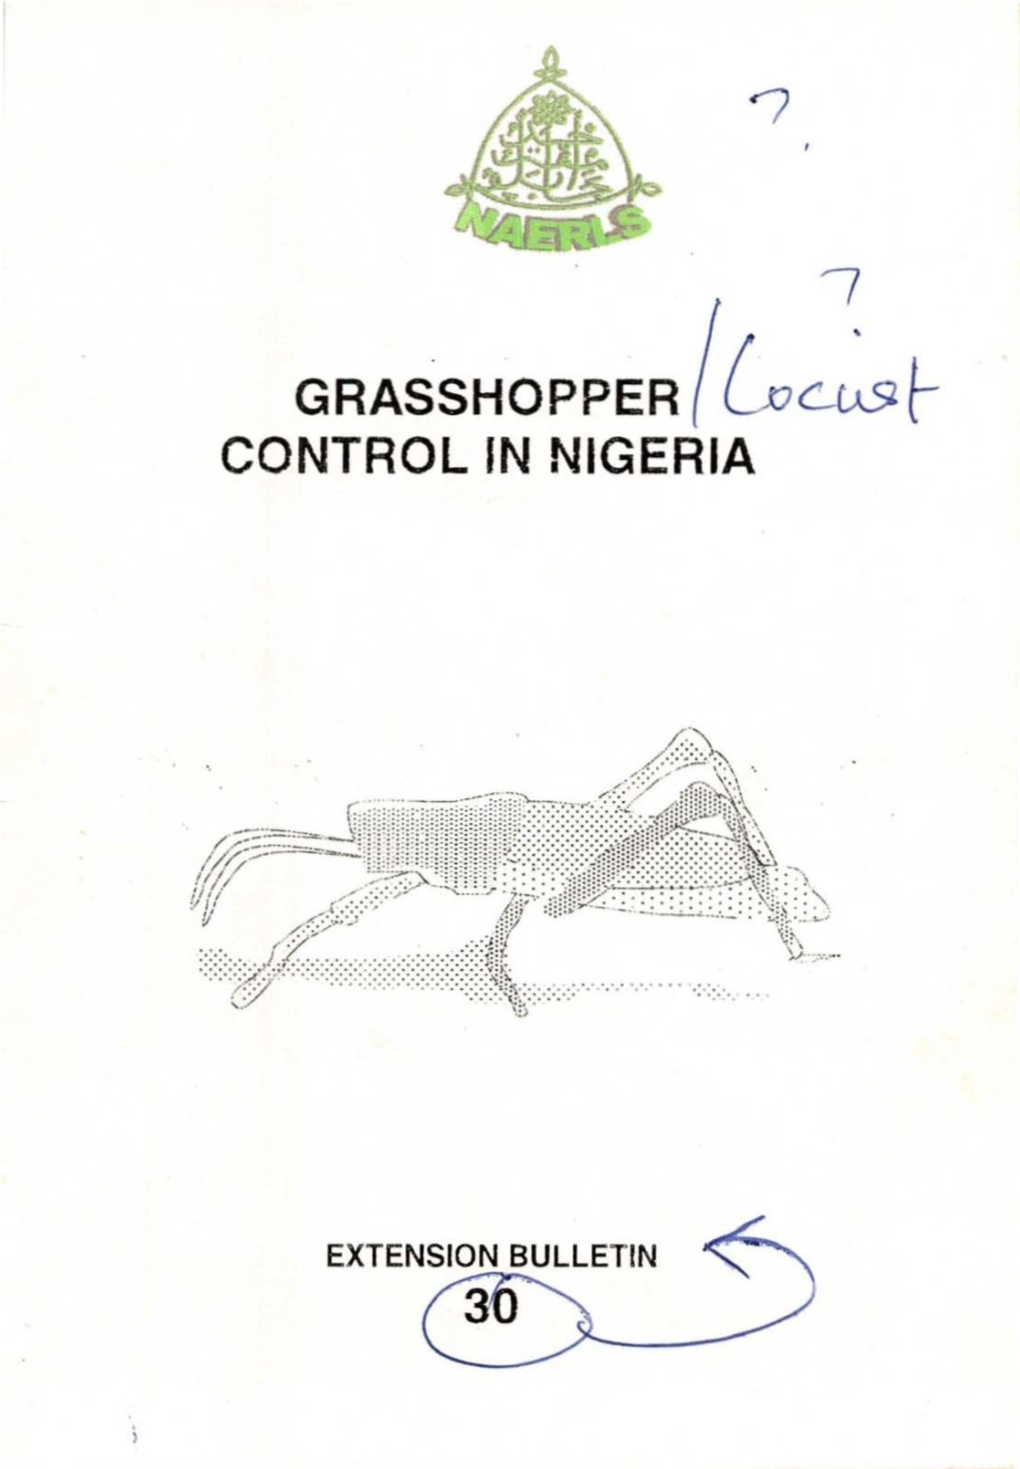 GRASSHOPPER ~~~R CONTROL in NIGERIA